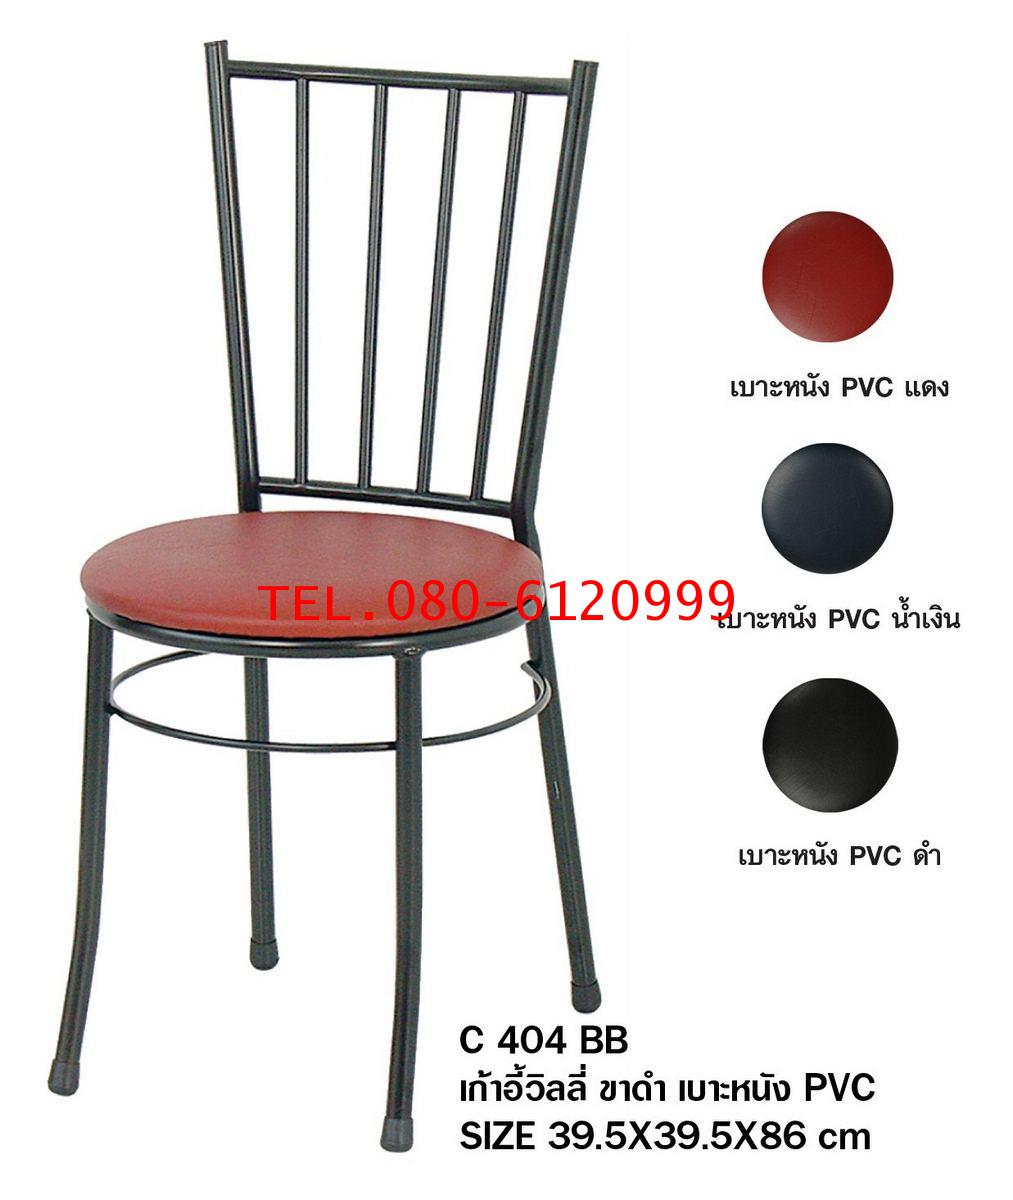 pmy29-20 เก้าอี้วิลลี่ ขาดำ เบาะหนัง PVC 0